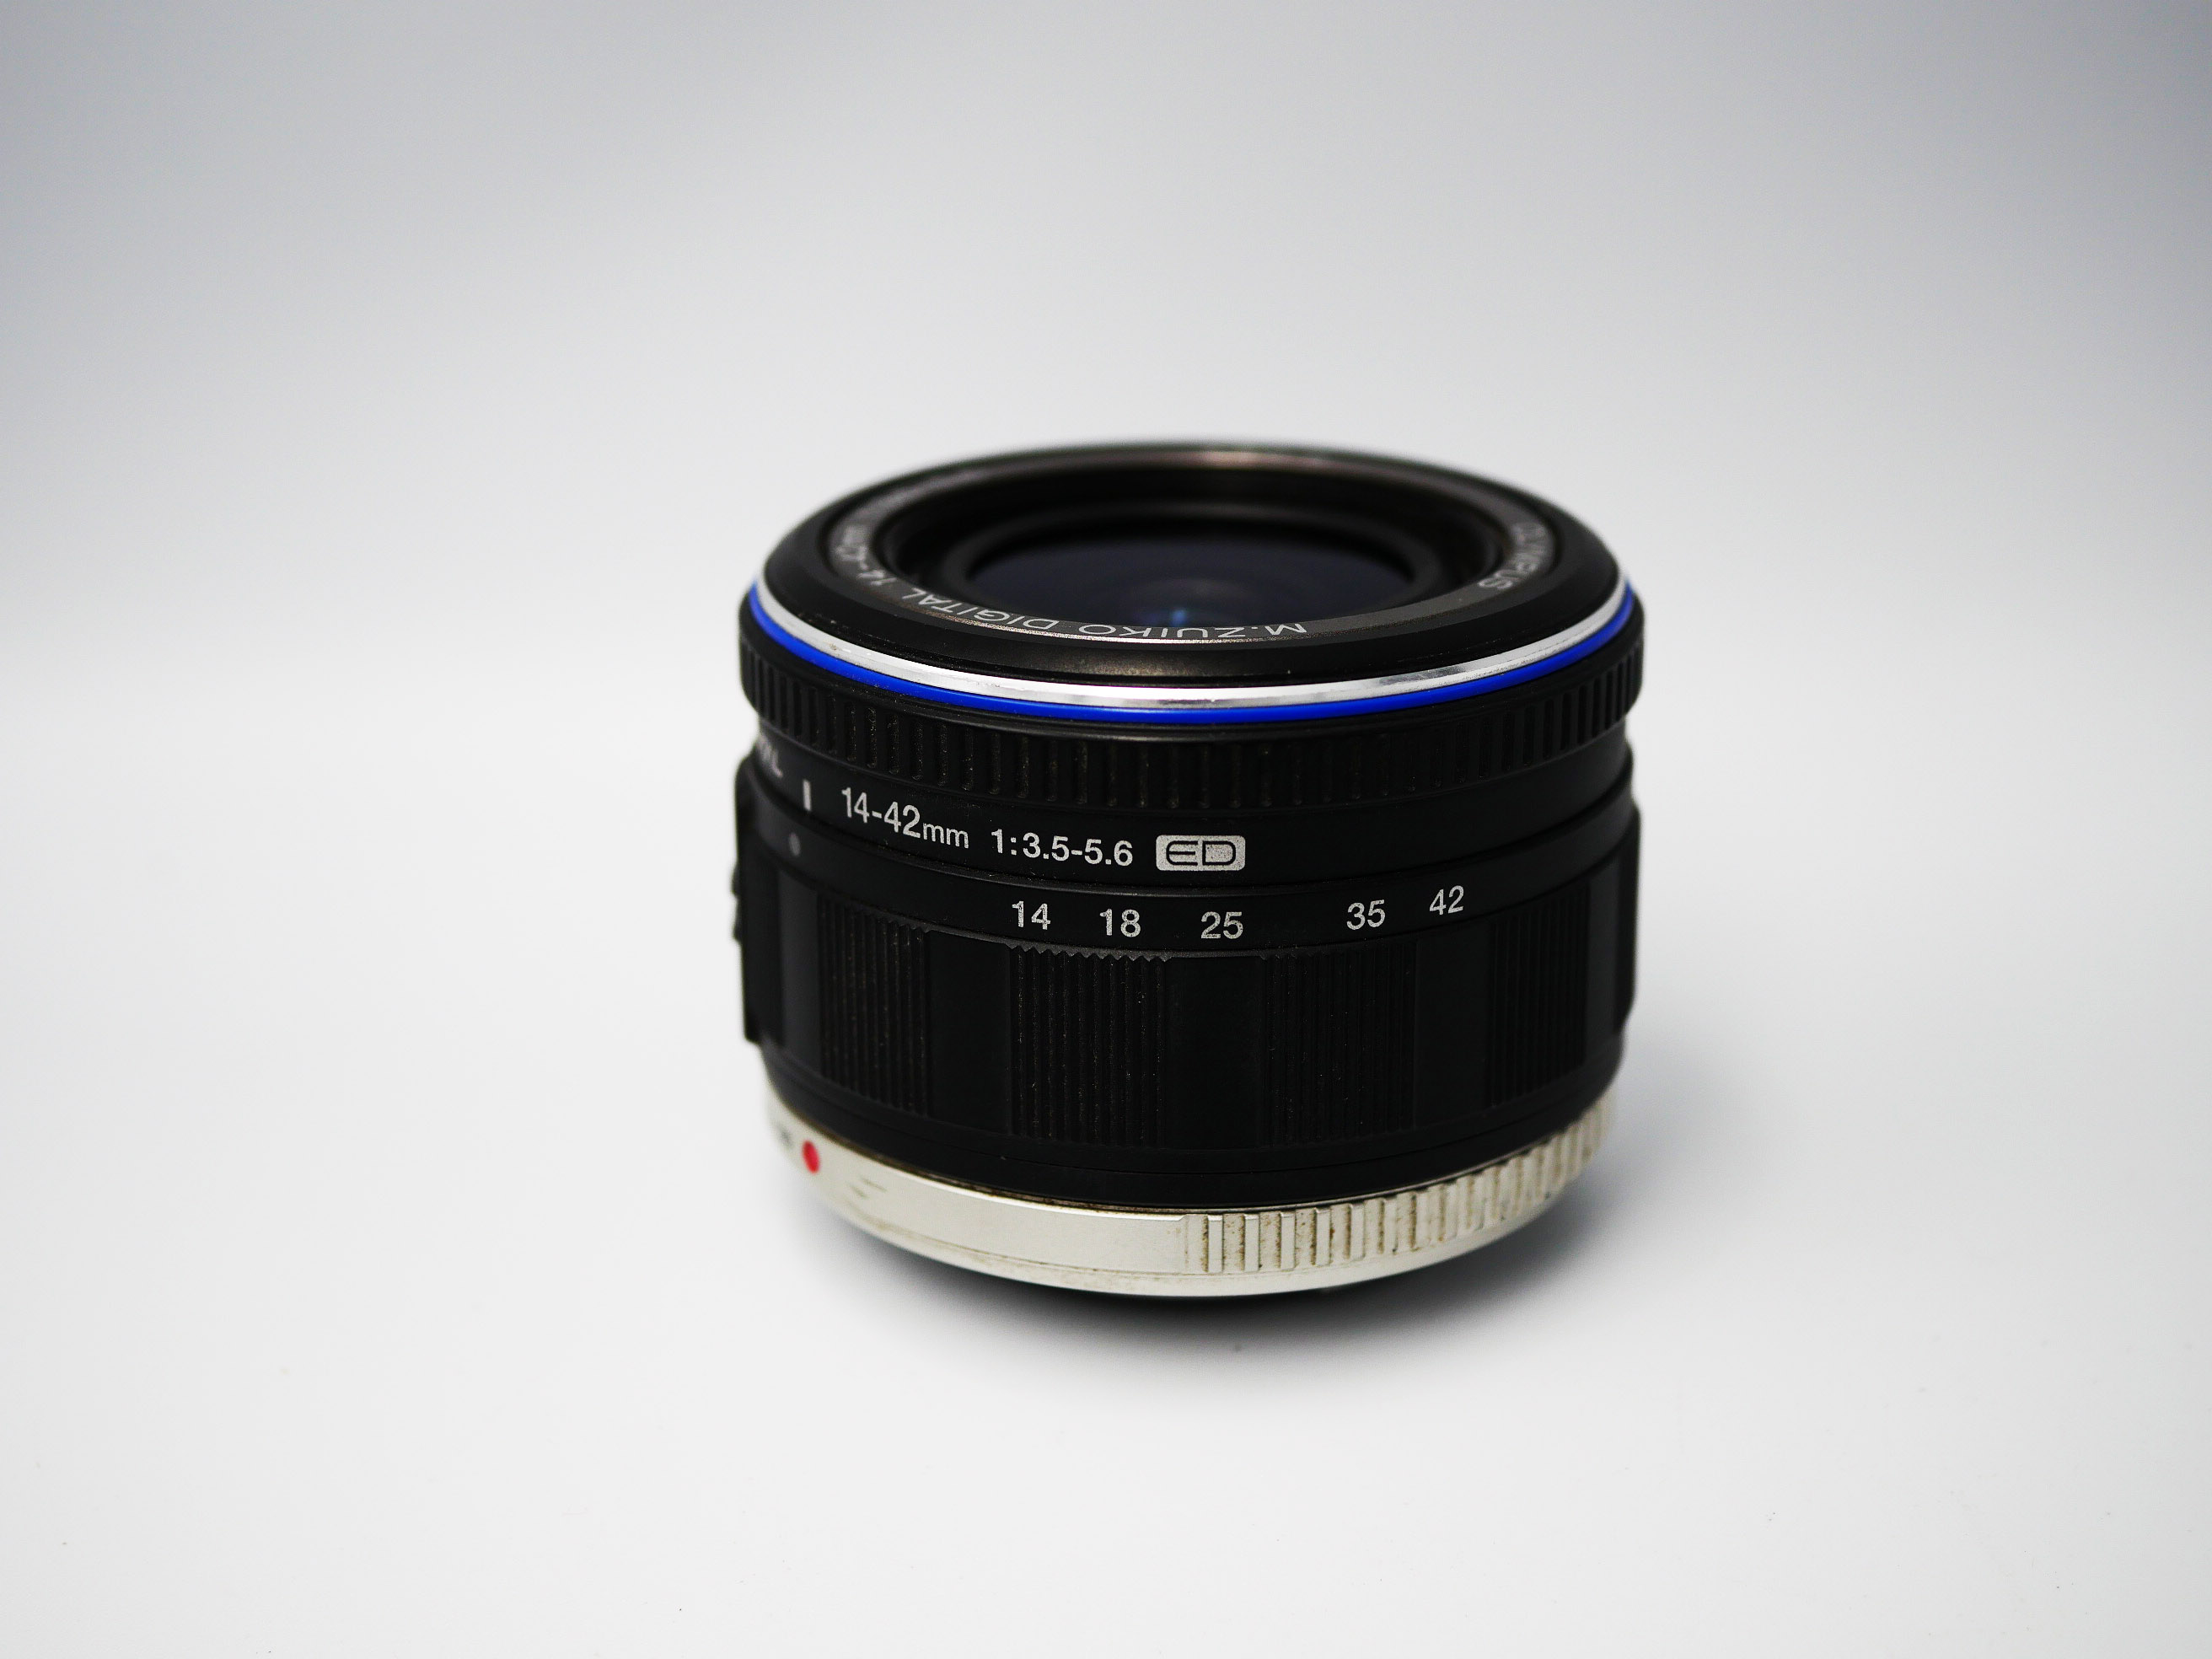 Olympus M.Zuiko Digital 14-42mm f3.5-5.6 ED Black Lens, 28-84mm eq